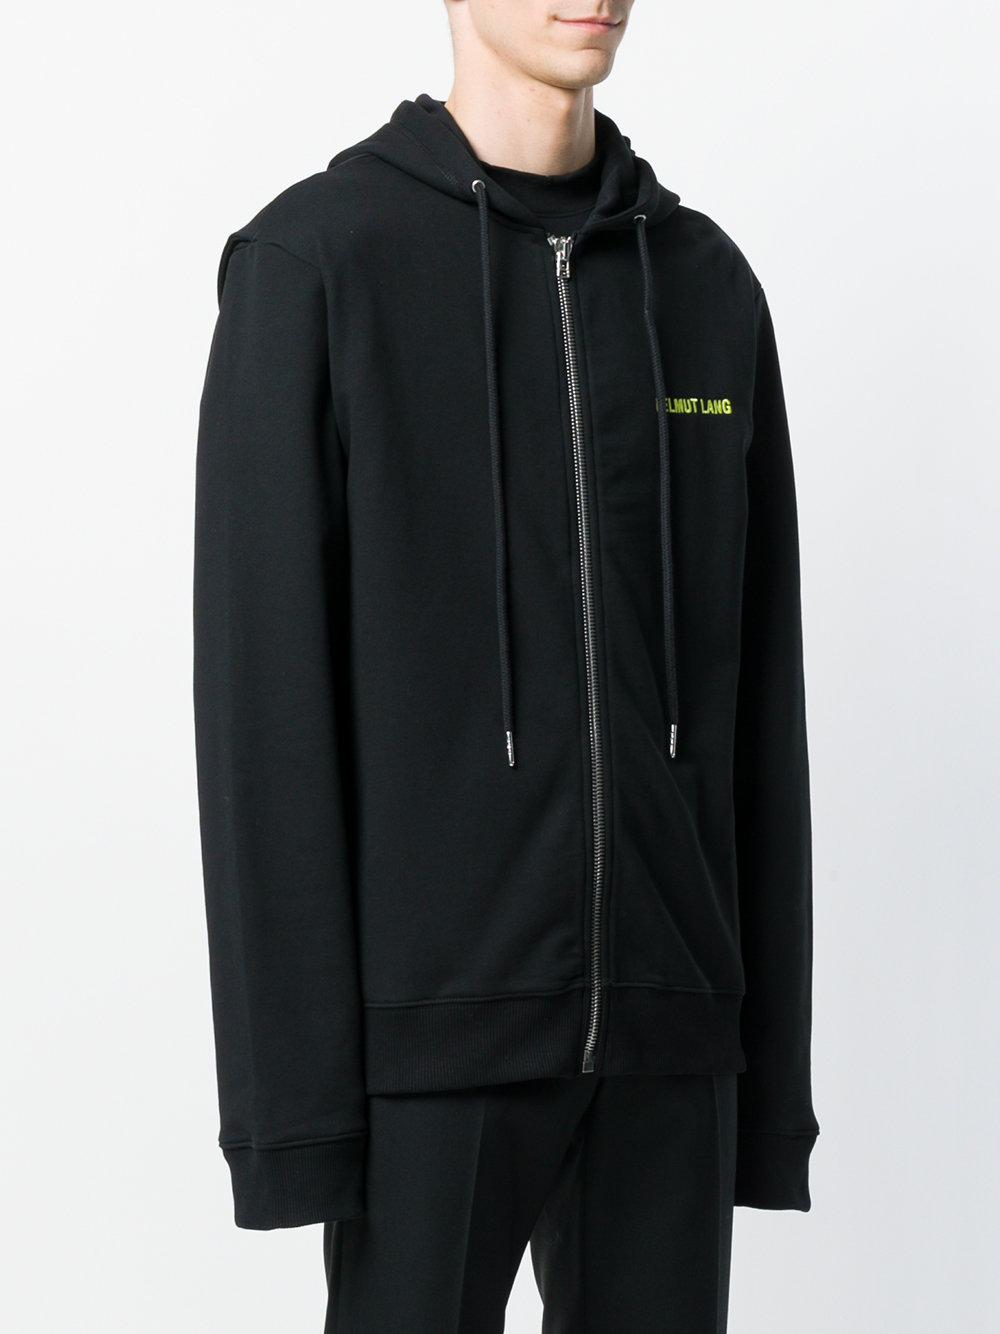 Lyst - Helmut Lang Logo Hooded Sweatshirt in Black for Men